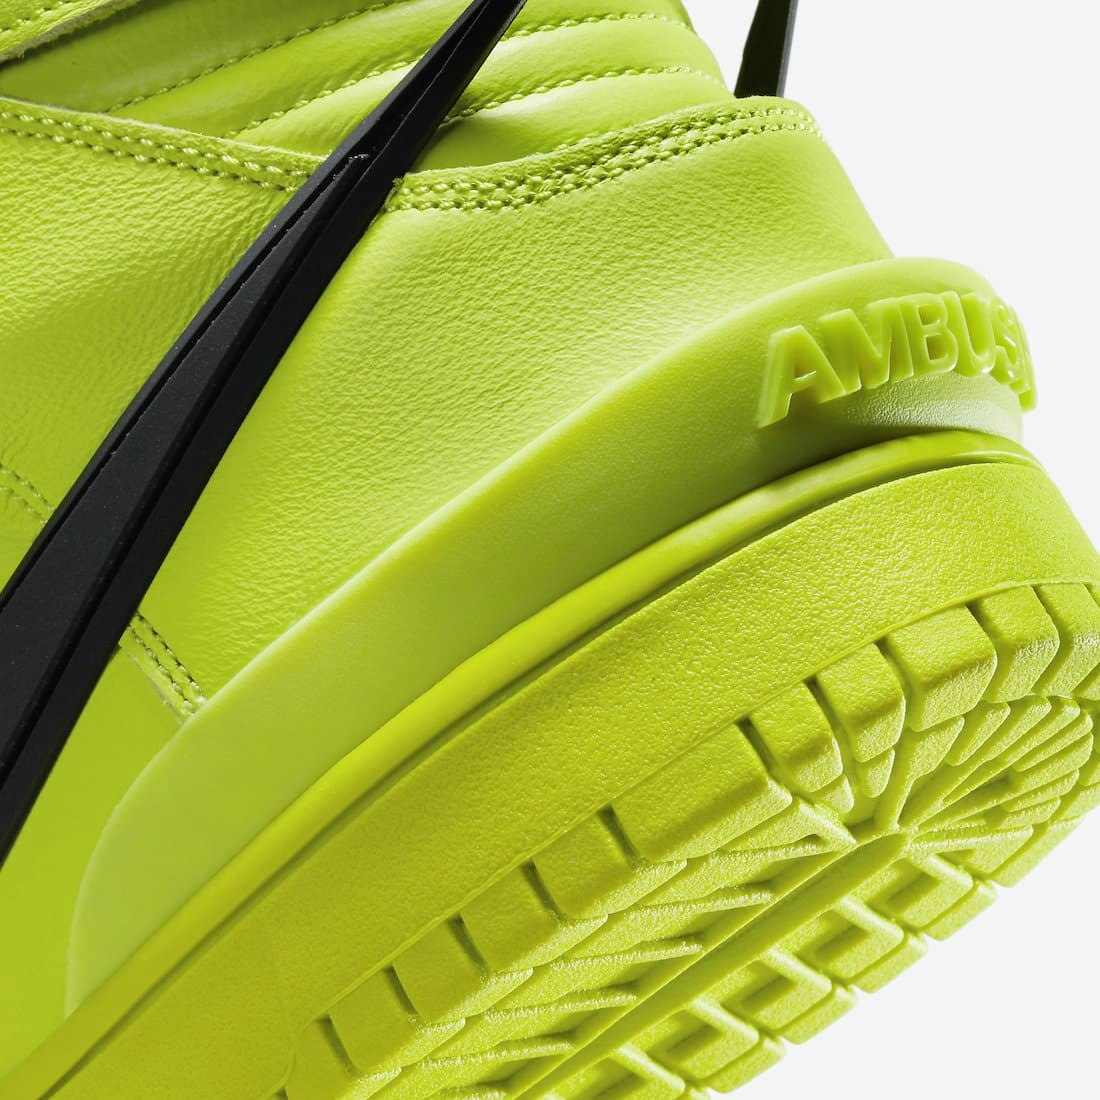 Ambush x Nike Dunk High “Flash Lime”